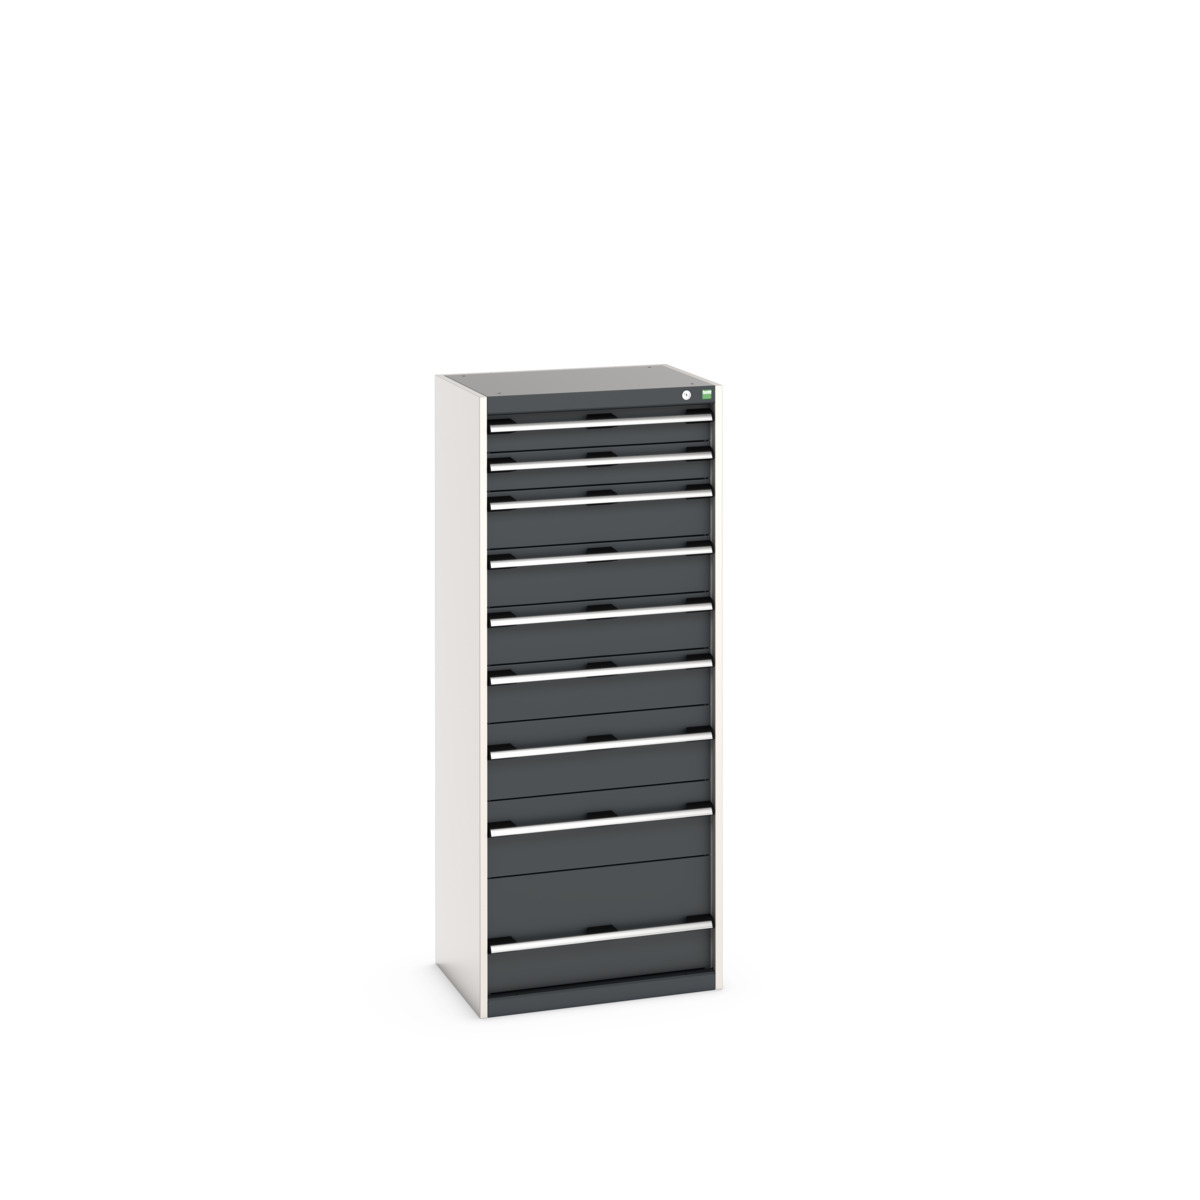 40011066. - cubio drawer cabinet